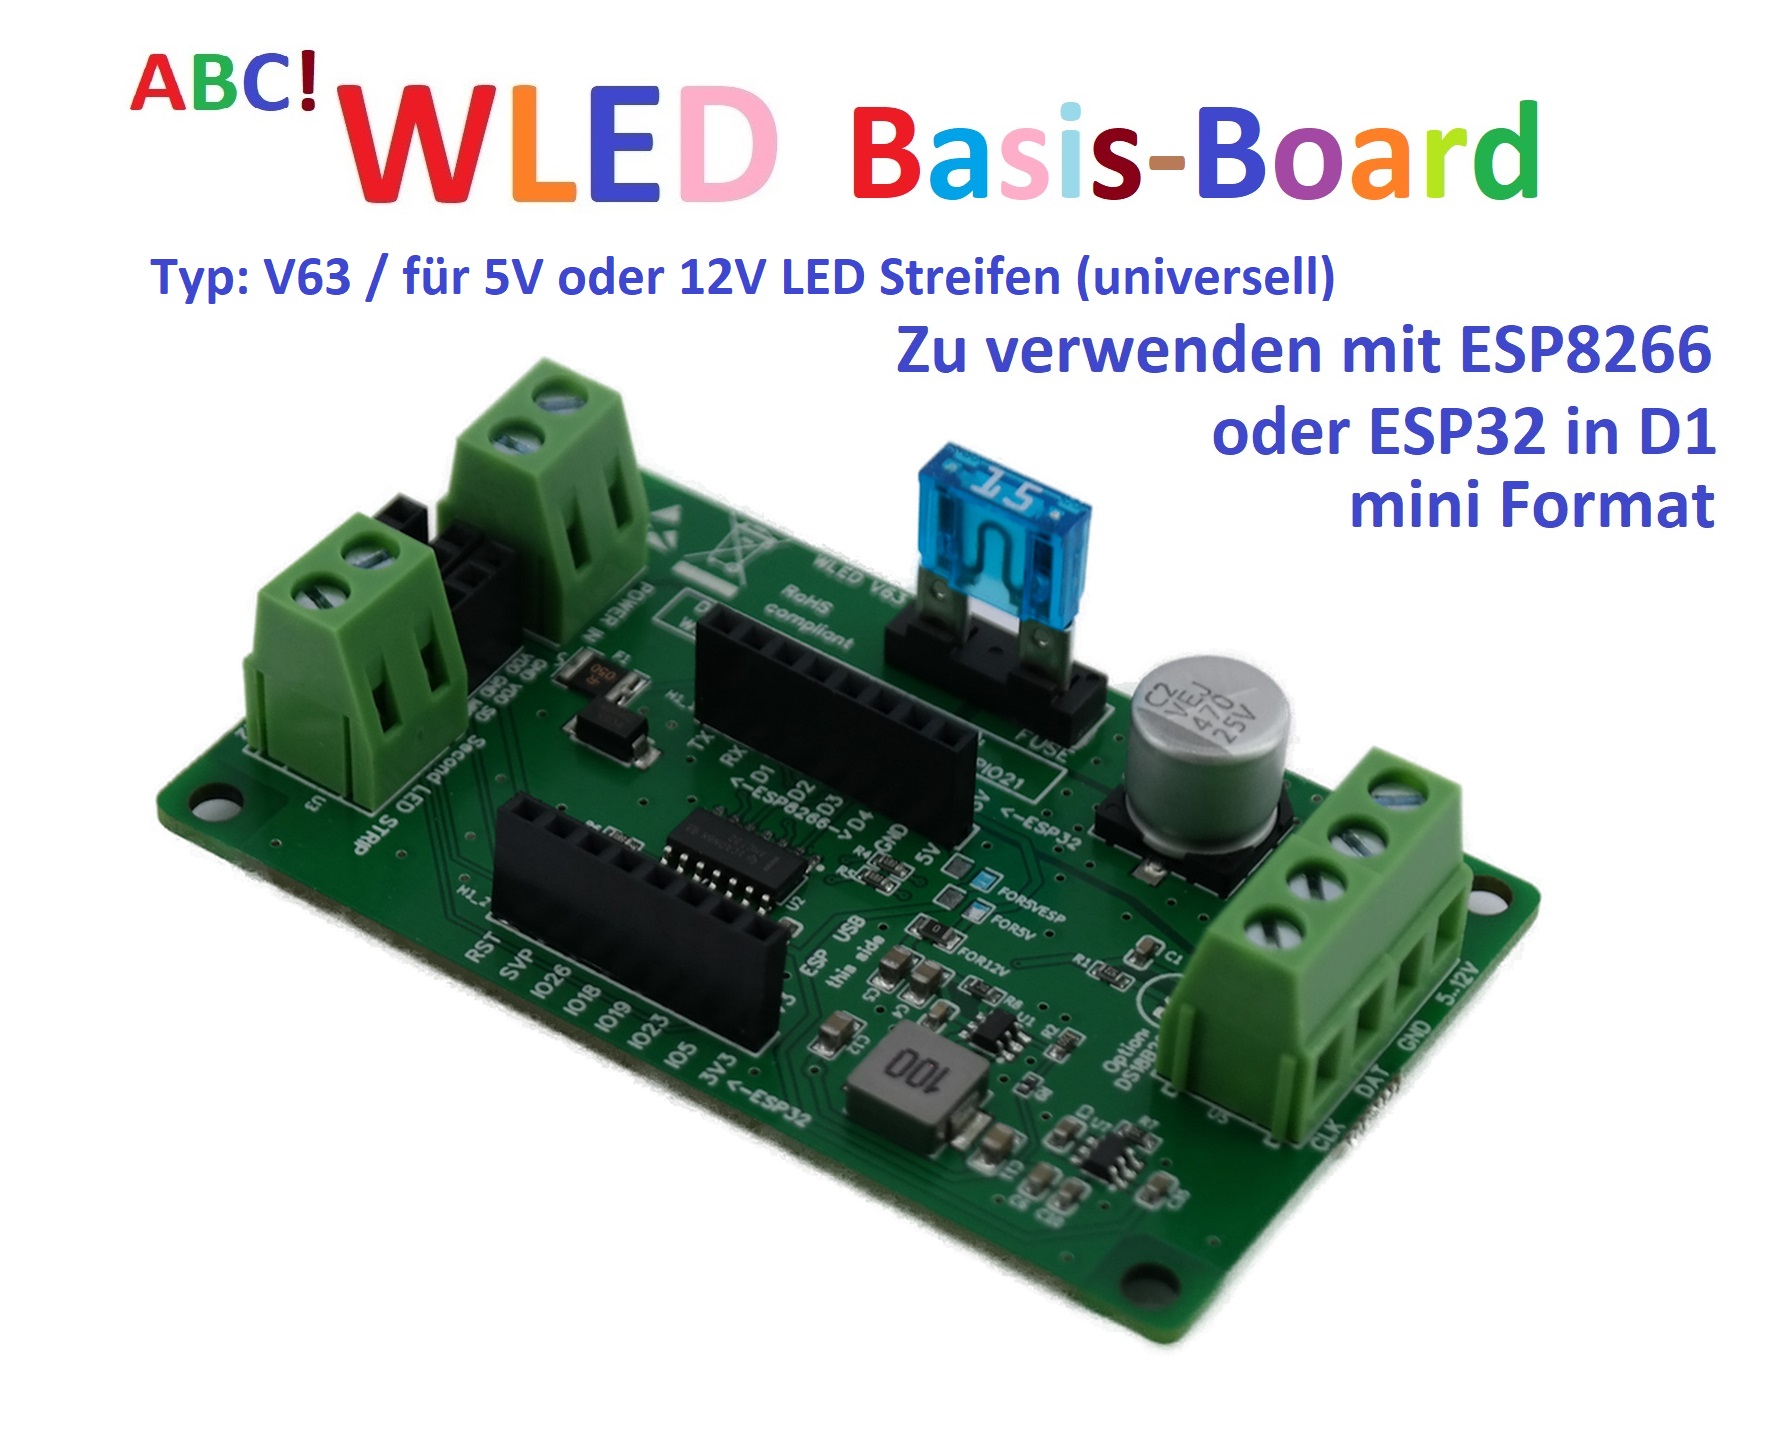 ABC! WLED Basis-Board für 5V und 12V LED (universell)